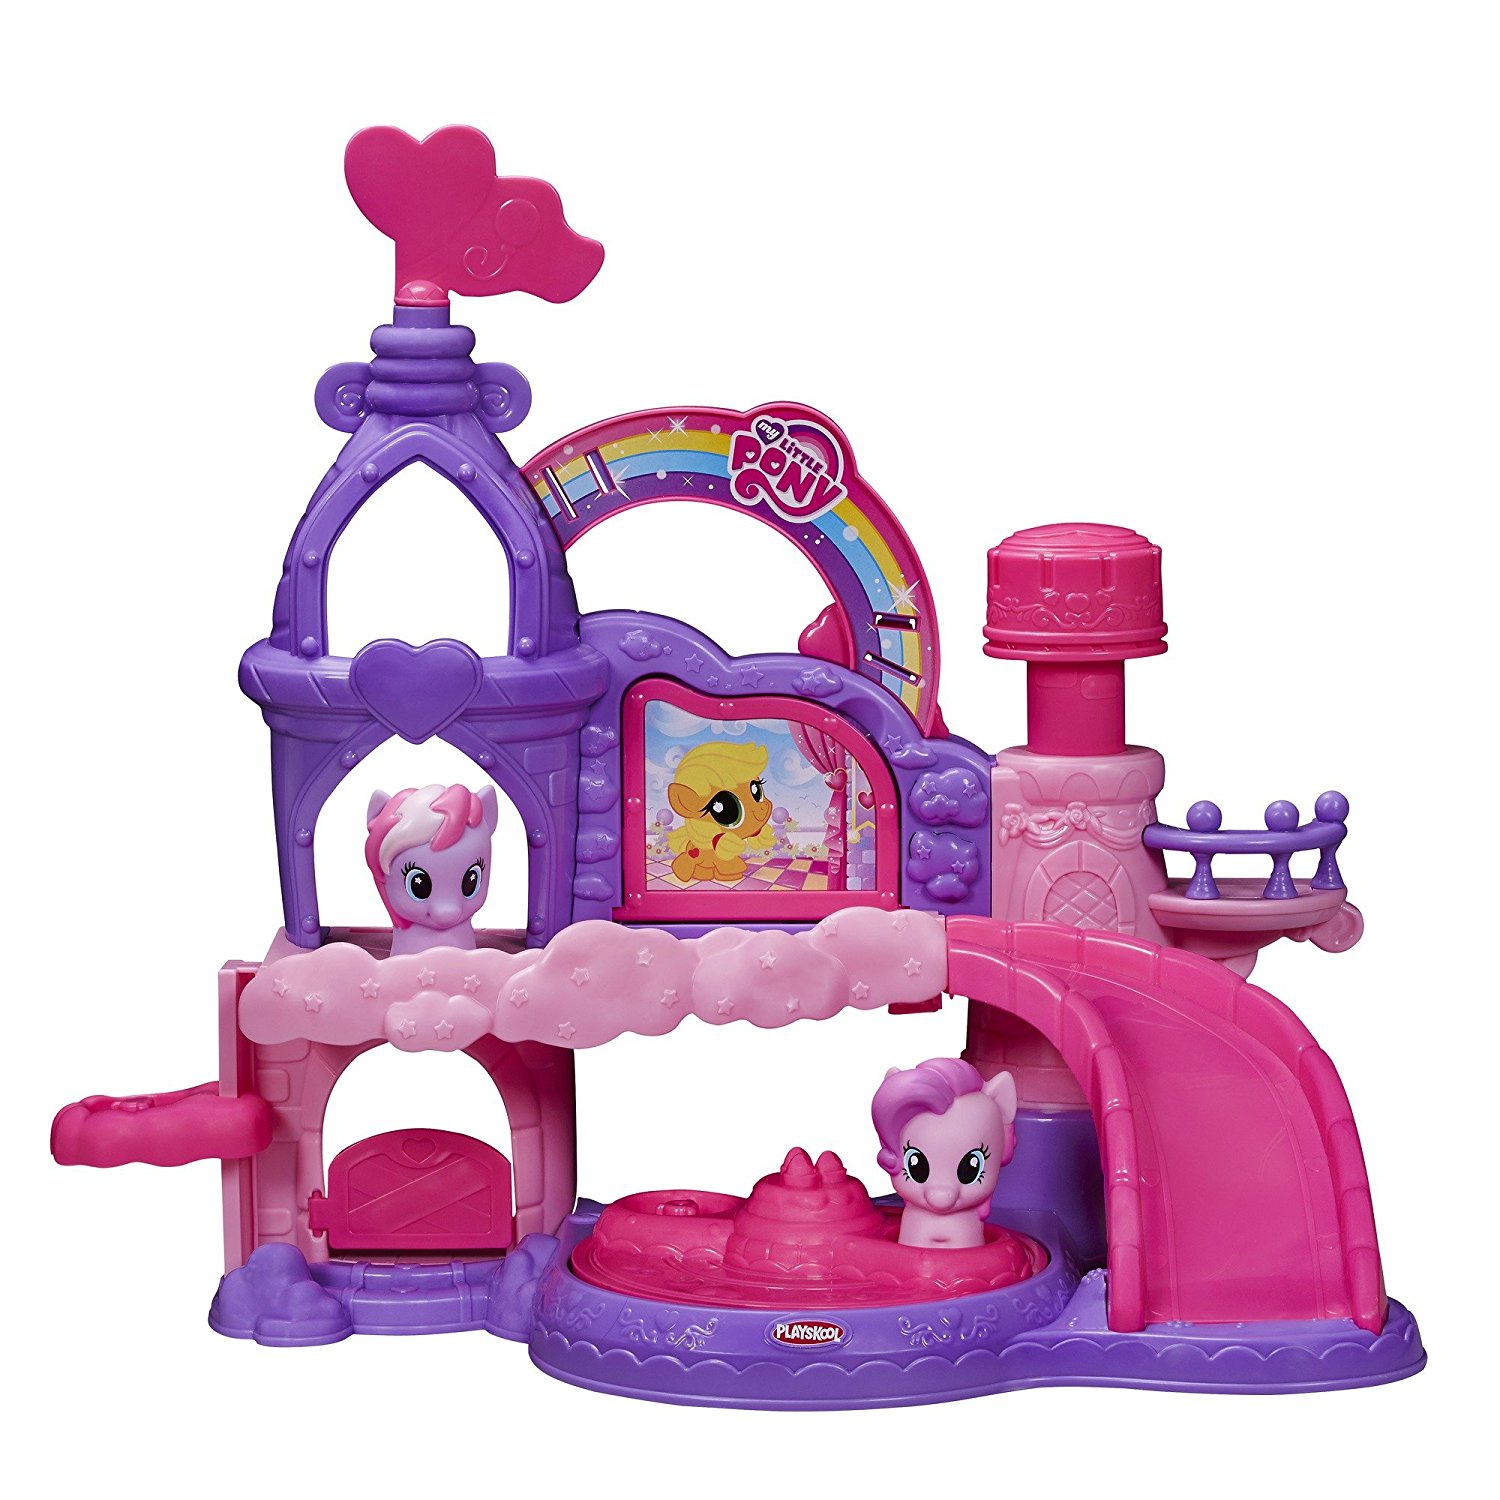 Playskool Friends 'My Little Pony' Musical Celebration Castle Play Set Toy